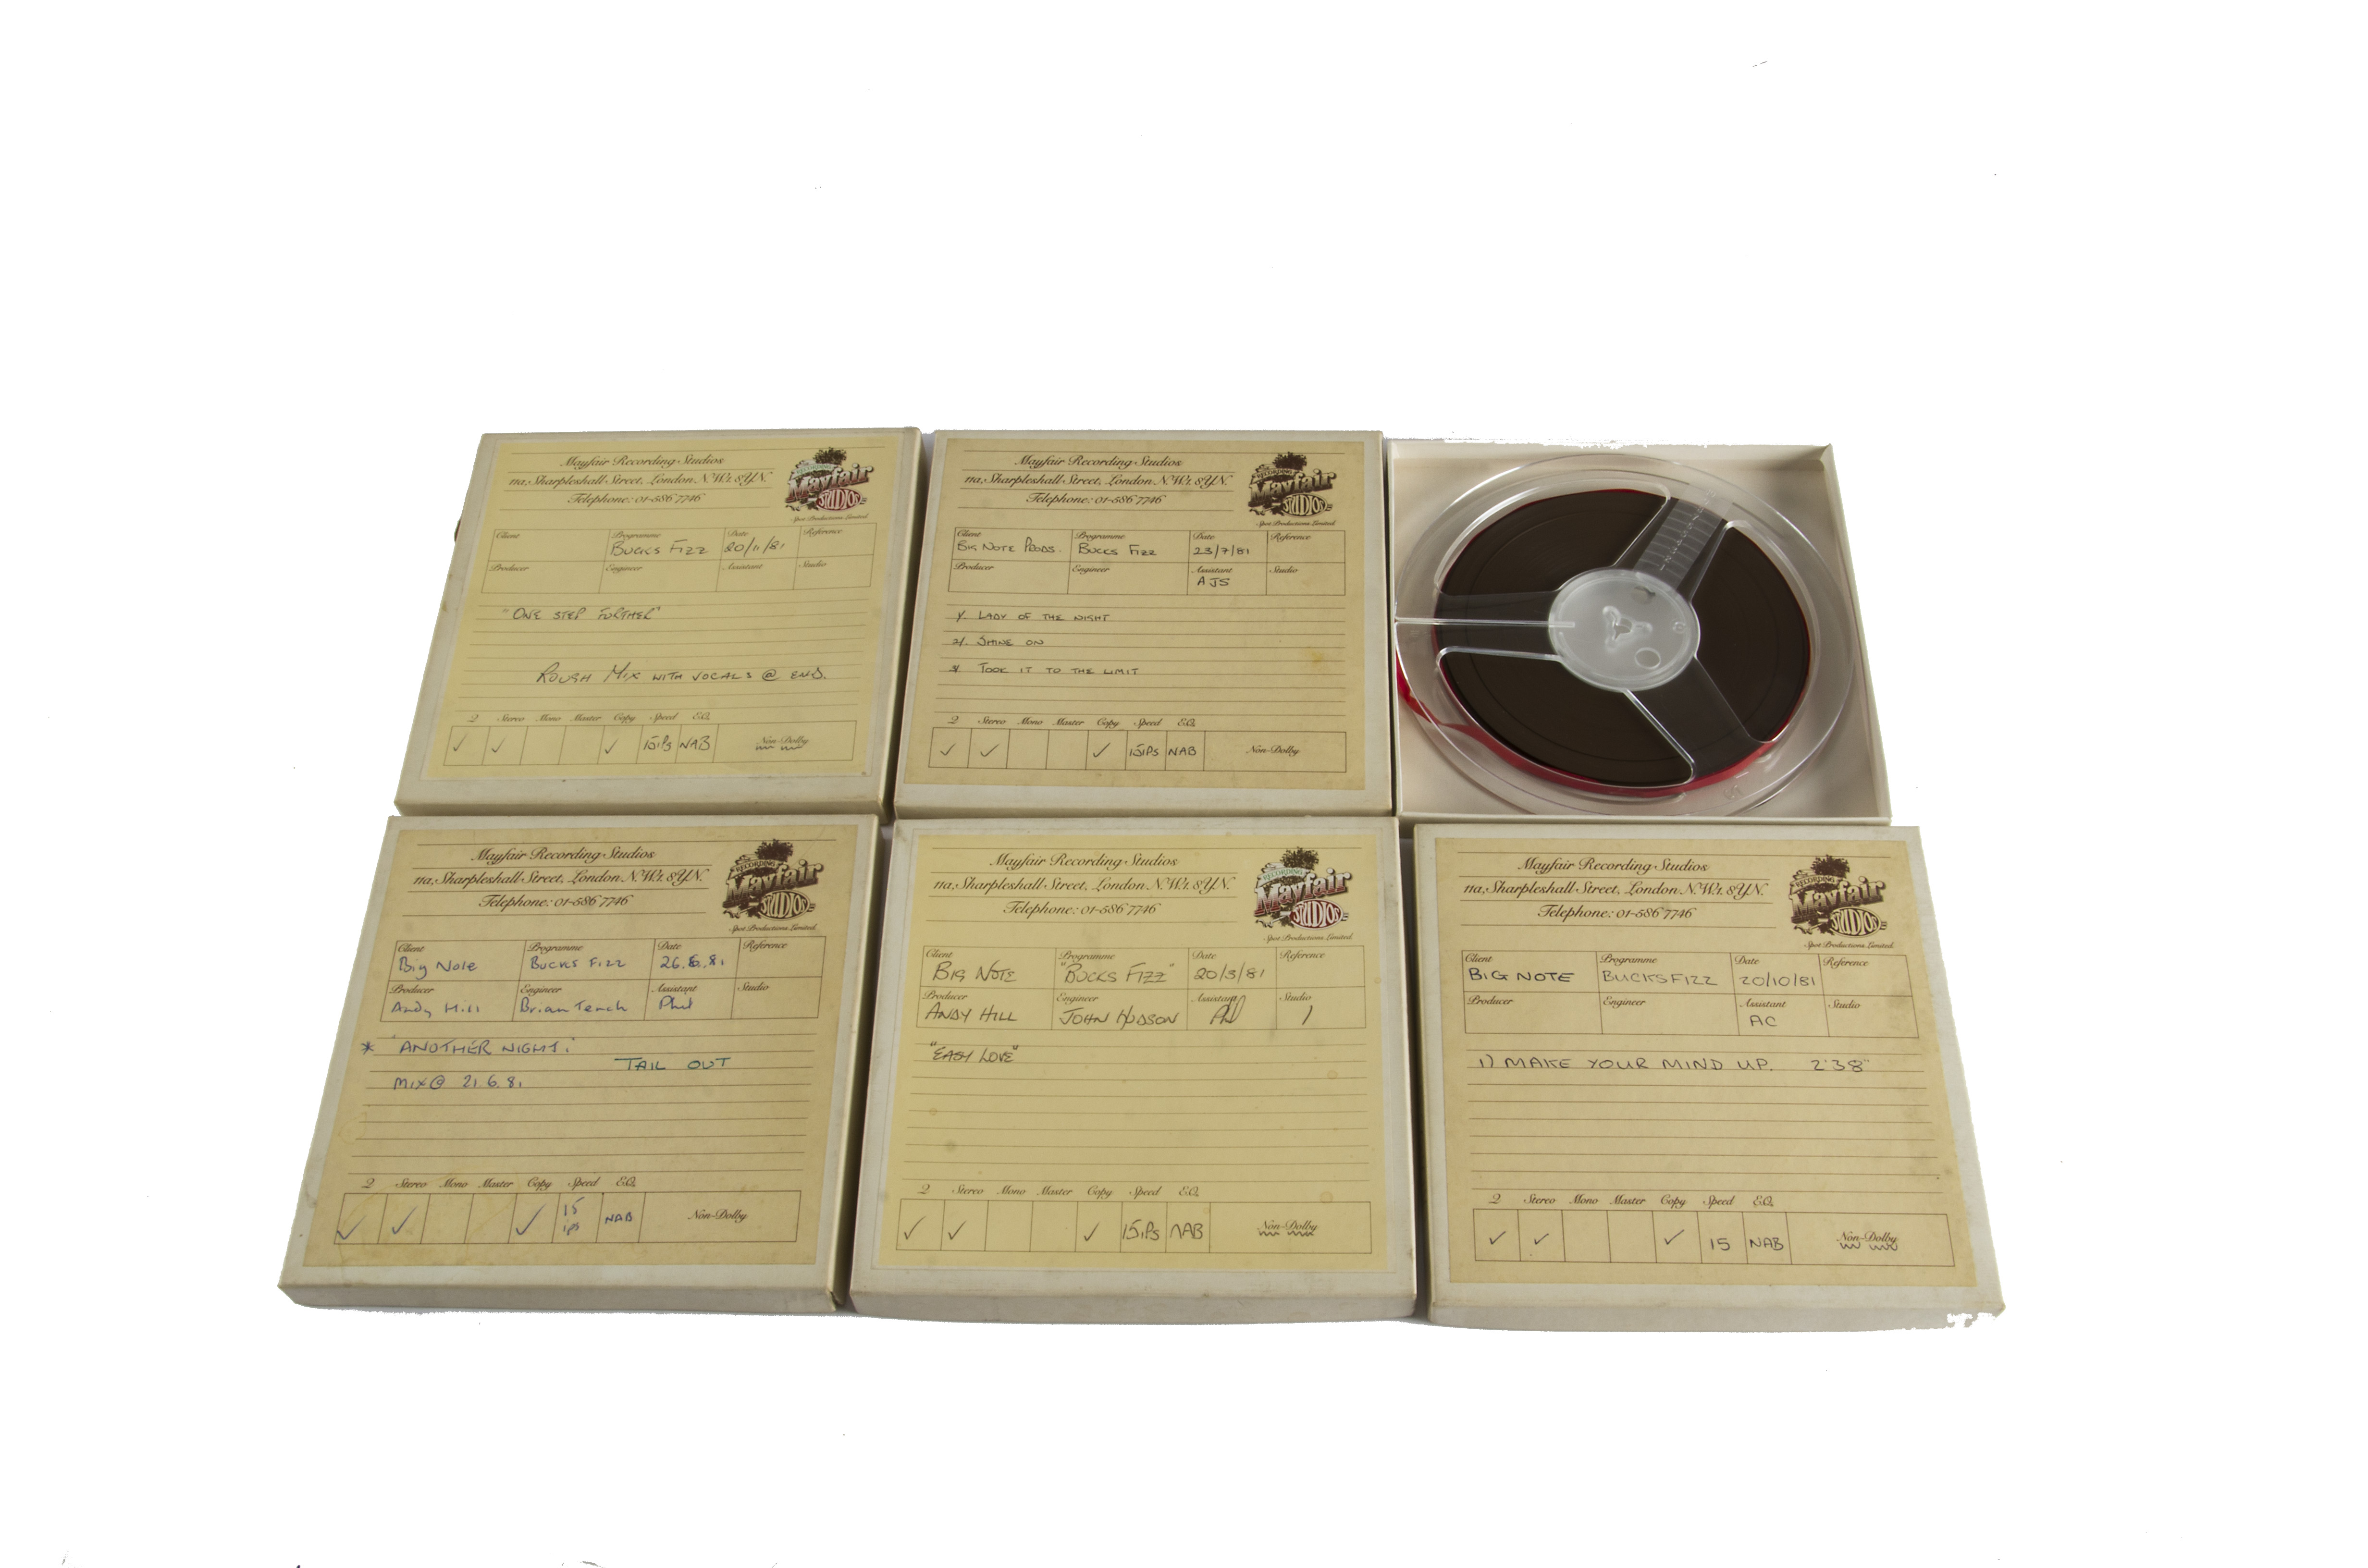 Bucks Fizz / Reel to Reel Tapes, five Bucks Fizz 15 ips tapes from Mayfair Studios comprising: